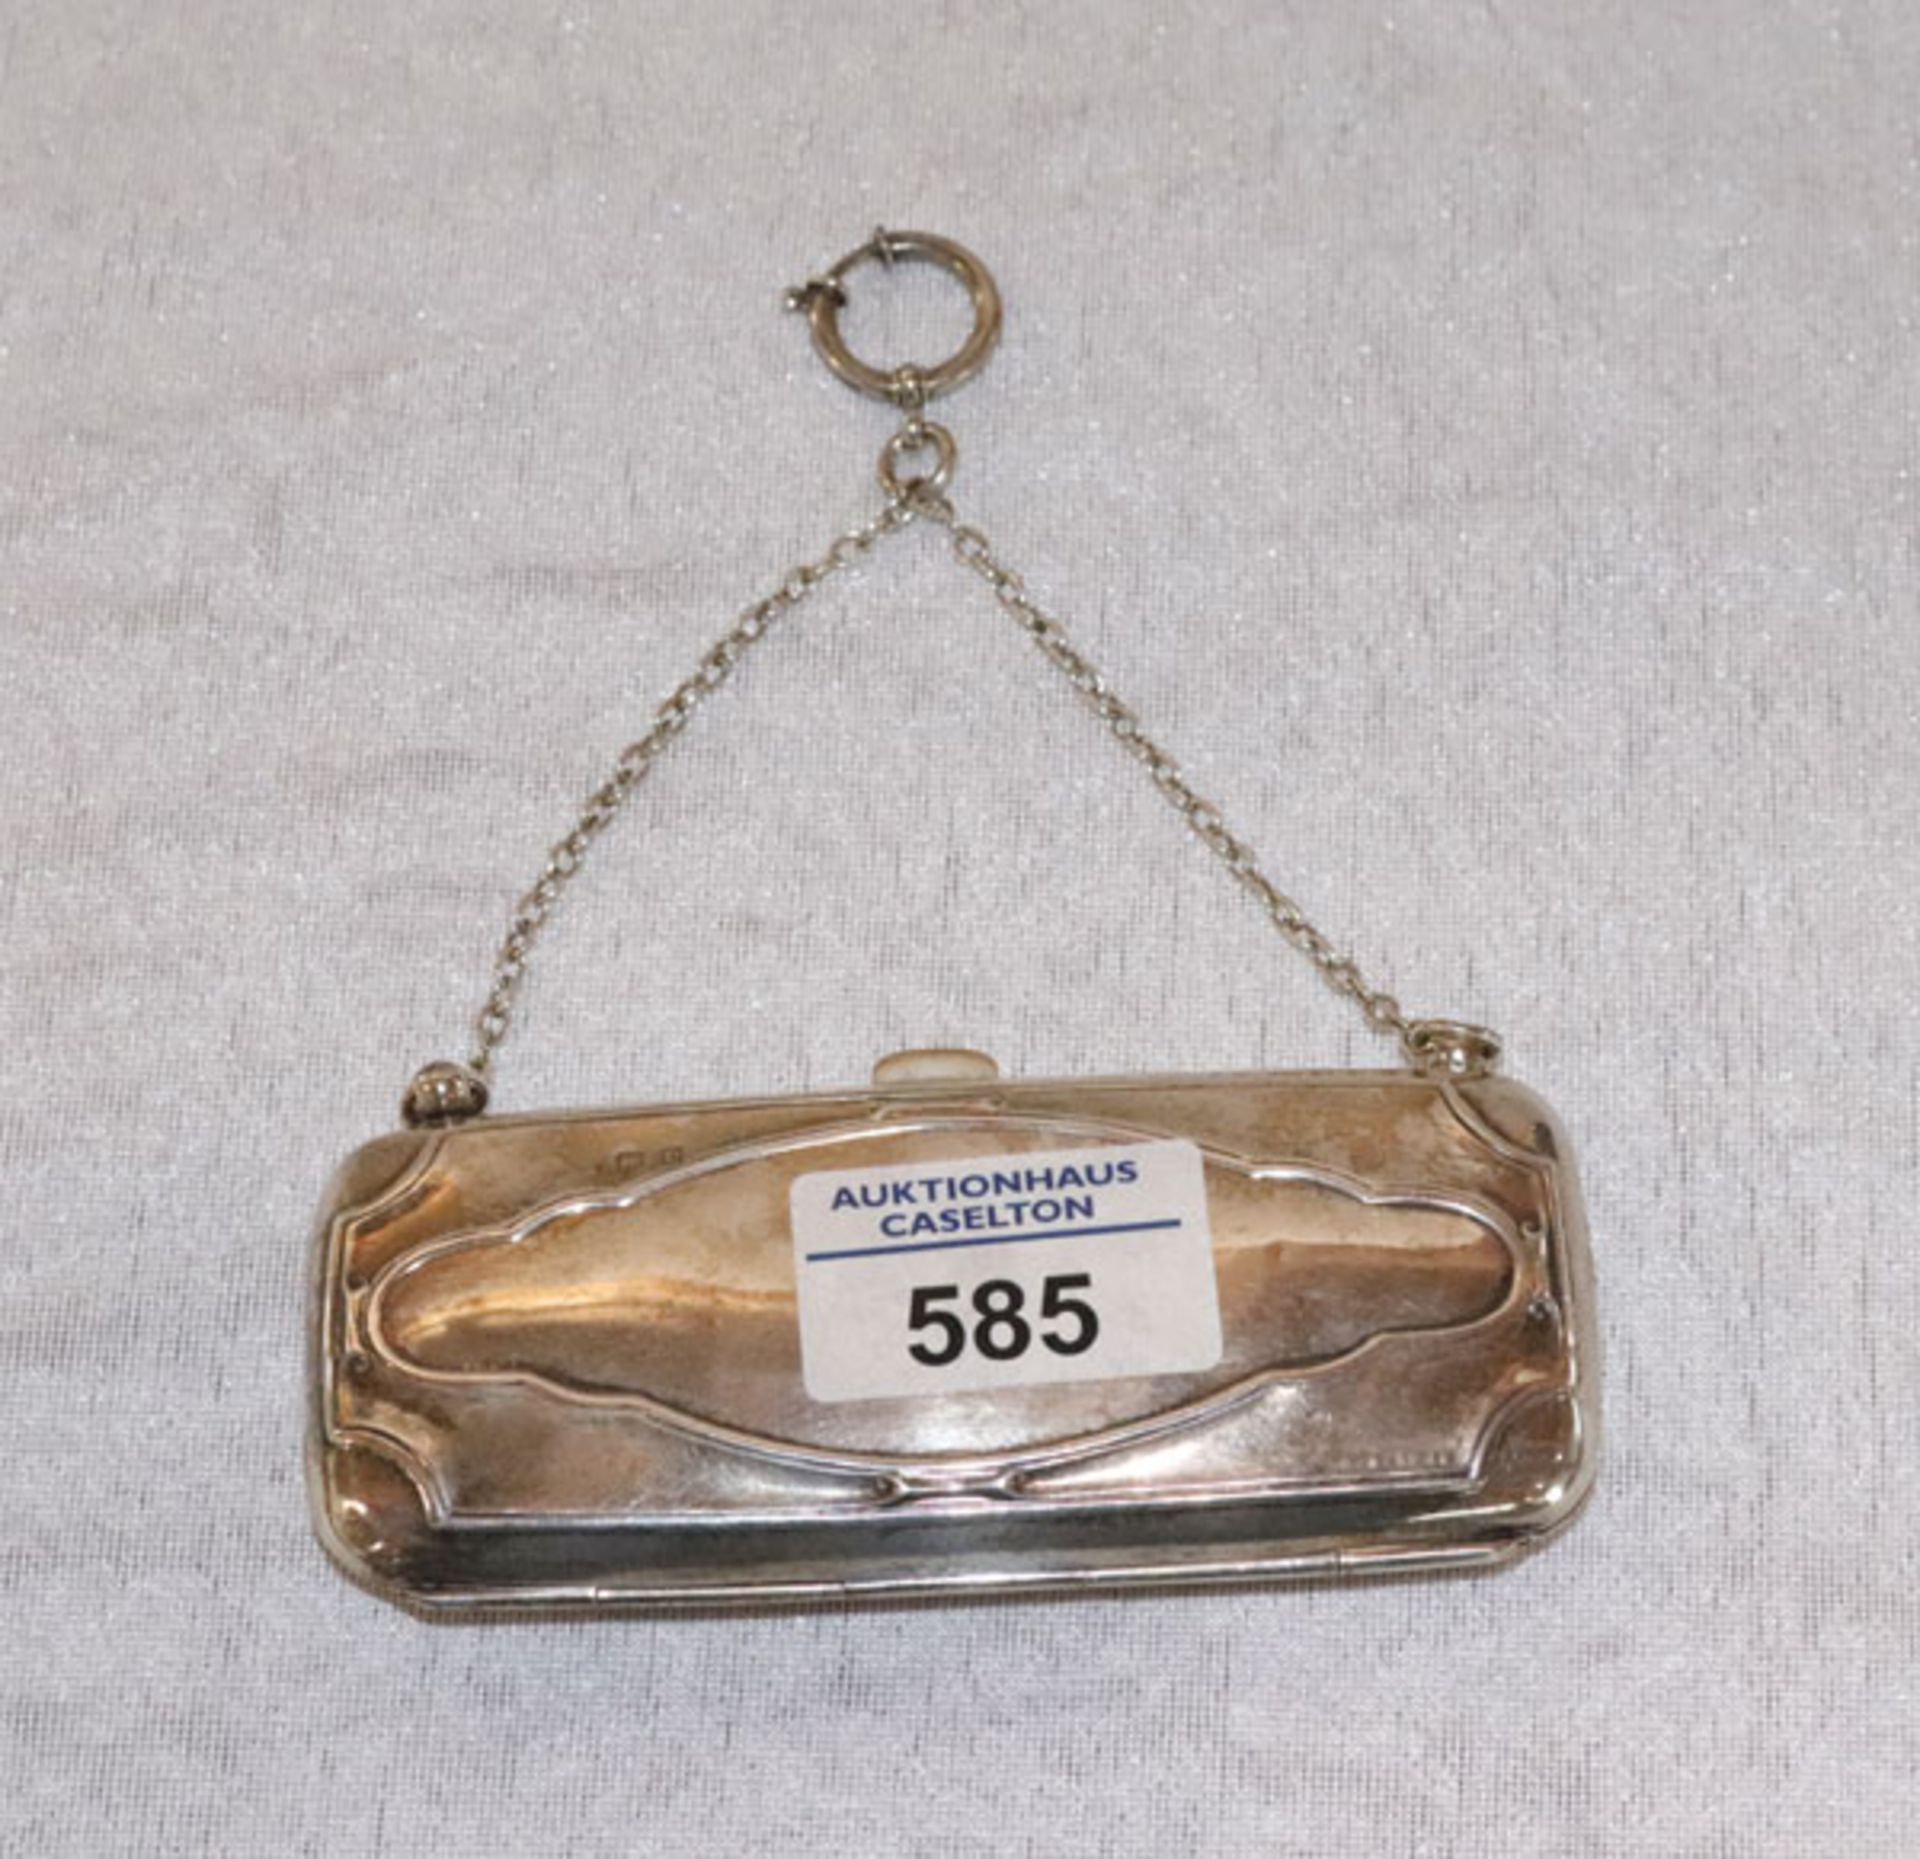 Kleines Silbertäschchen, England, Sterlingsilber, 81 gr, gut erhalten, H 5,5 cm, B 11,5 cm, T 1,5